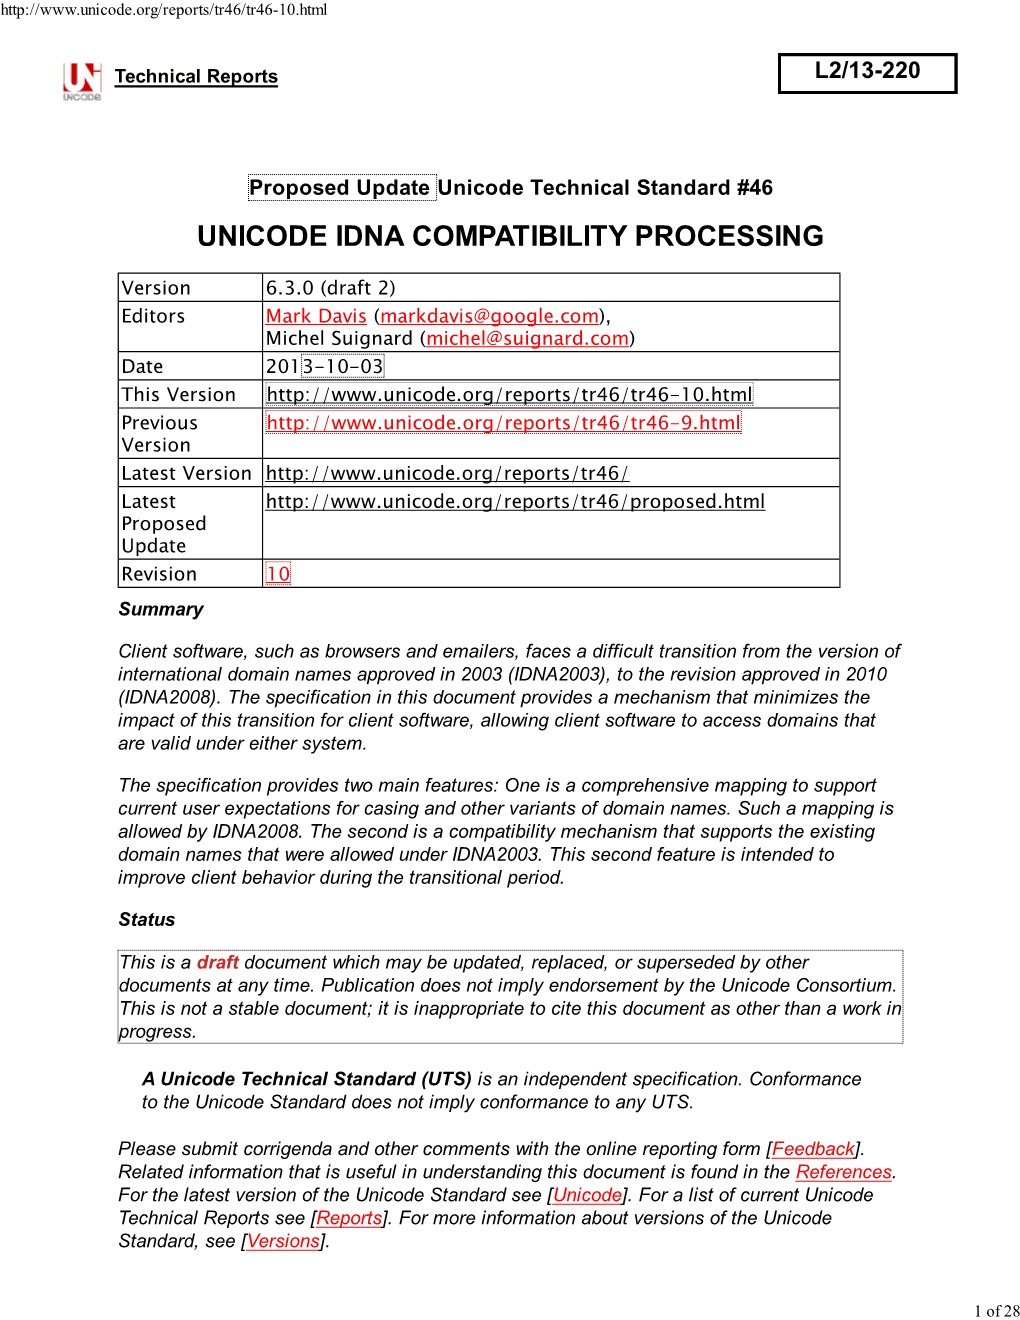 UTS #46: Unicode IDNA Compatibility Processing